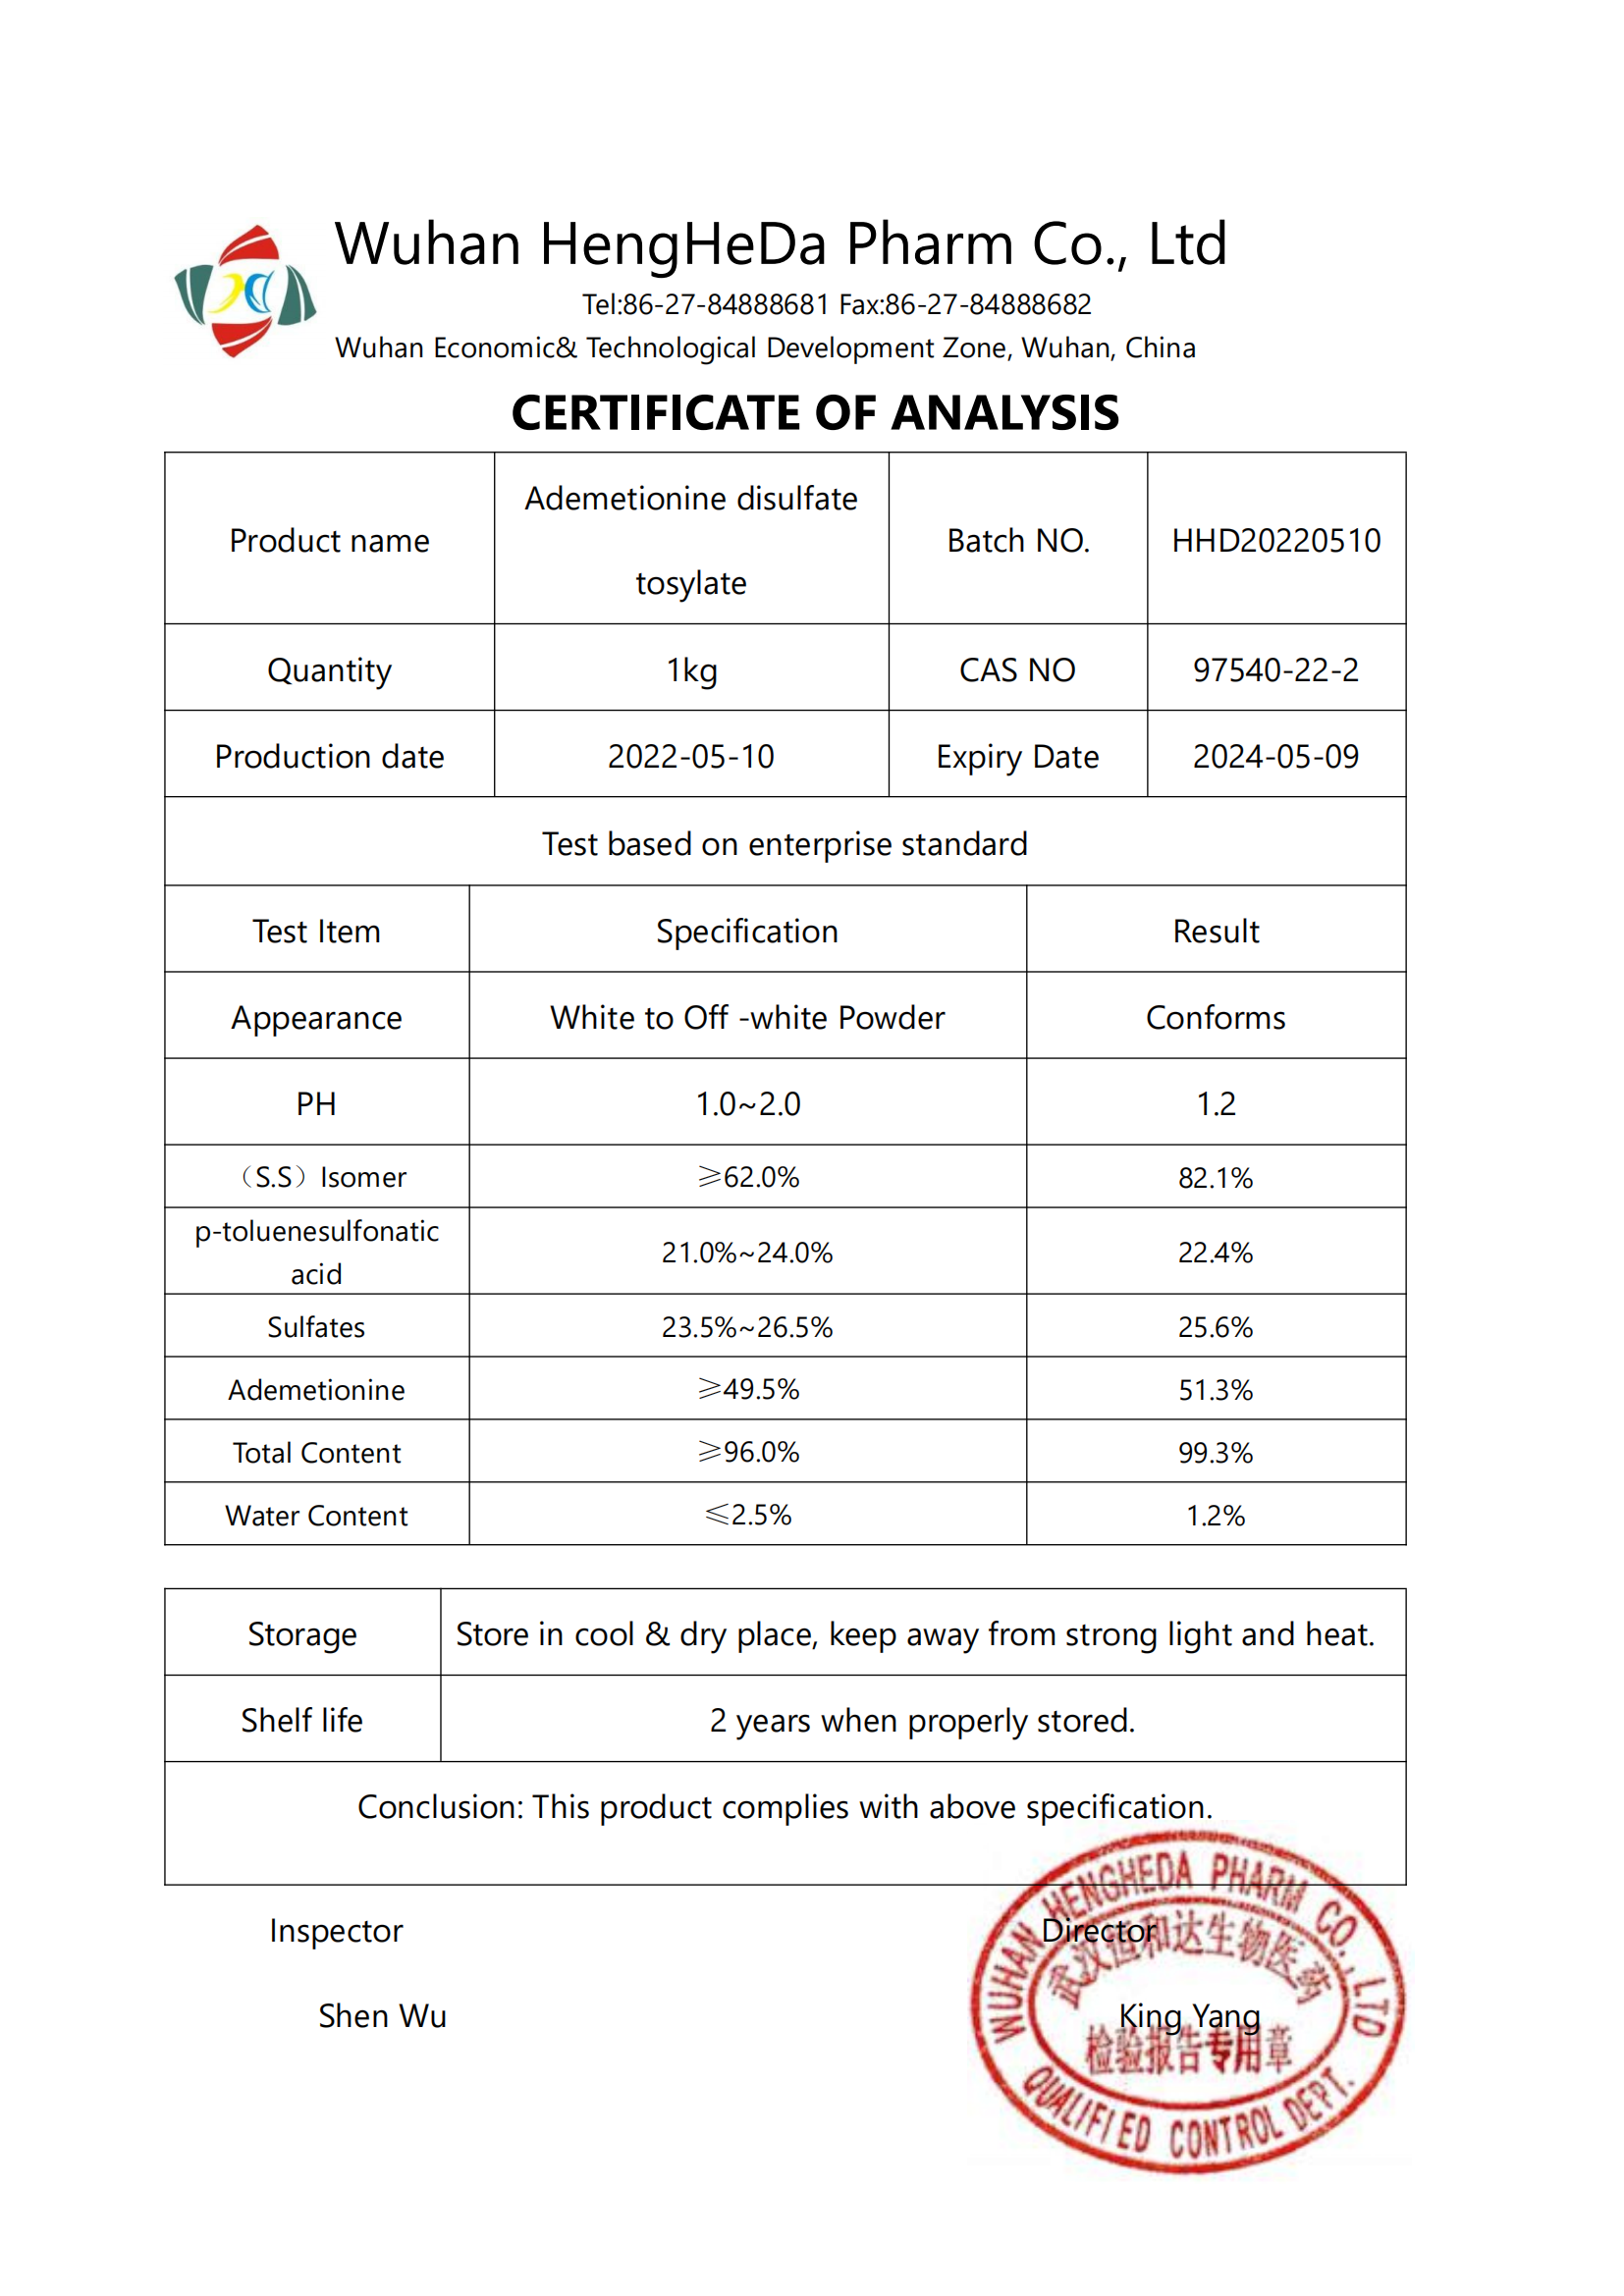 High Quality Ademetionine disulfate tosylate CAS 97540-22-2